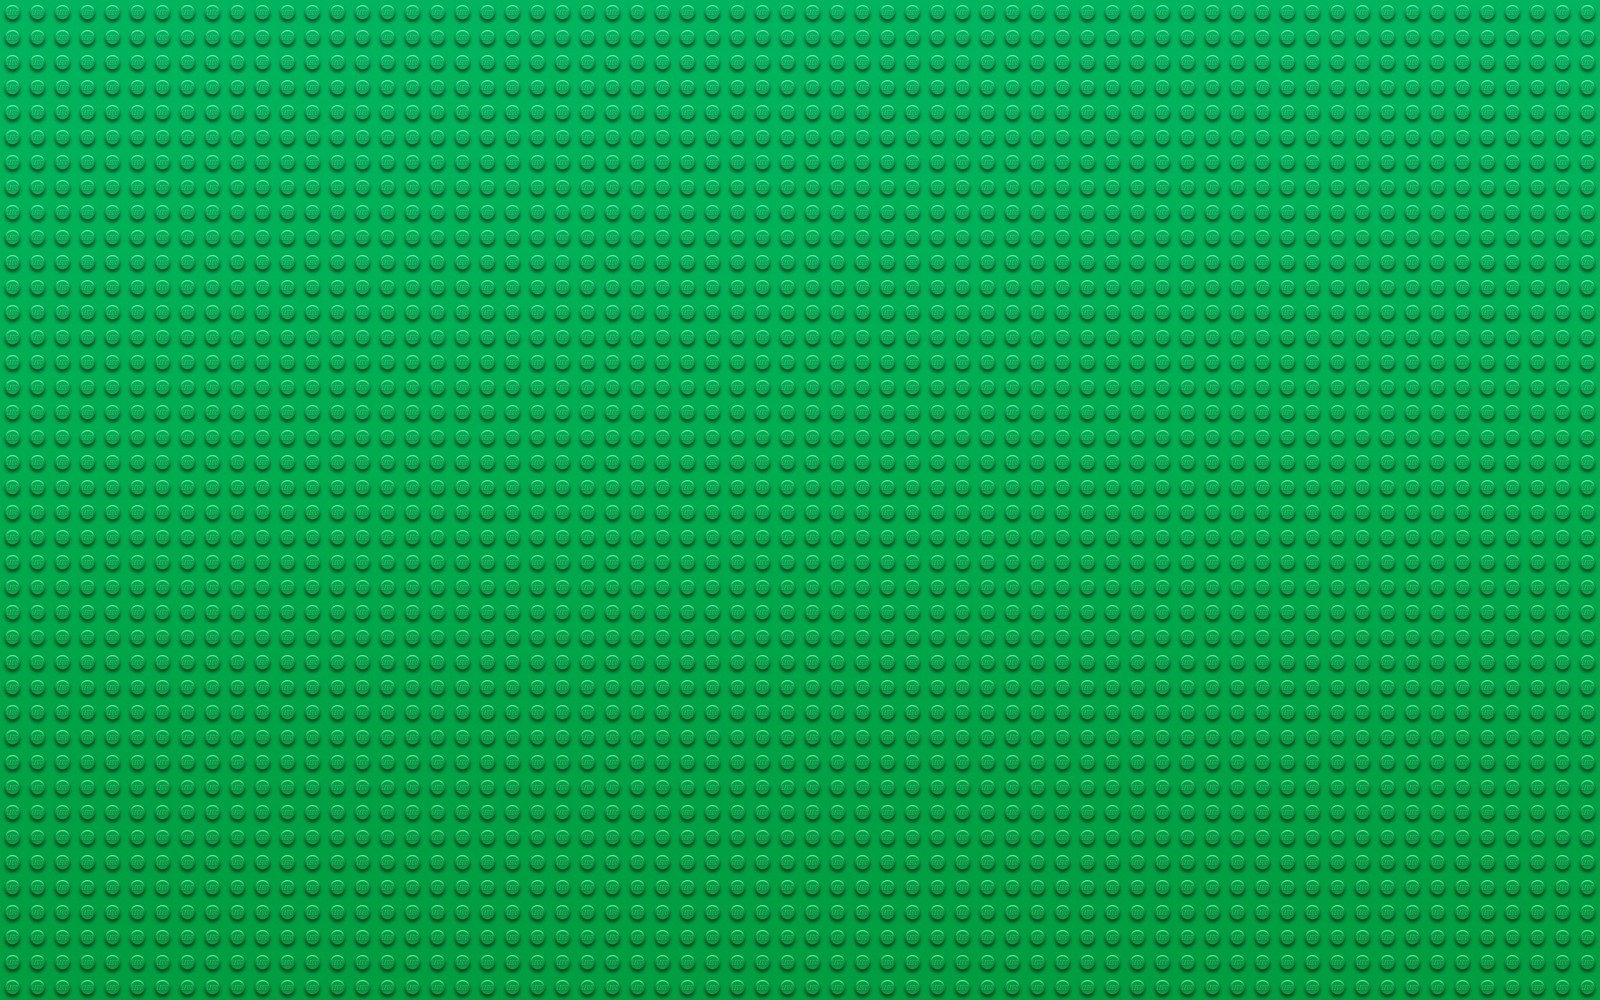 lego_points_circles_green-773303.jpg!d.jpg